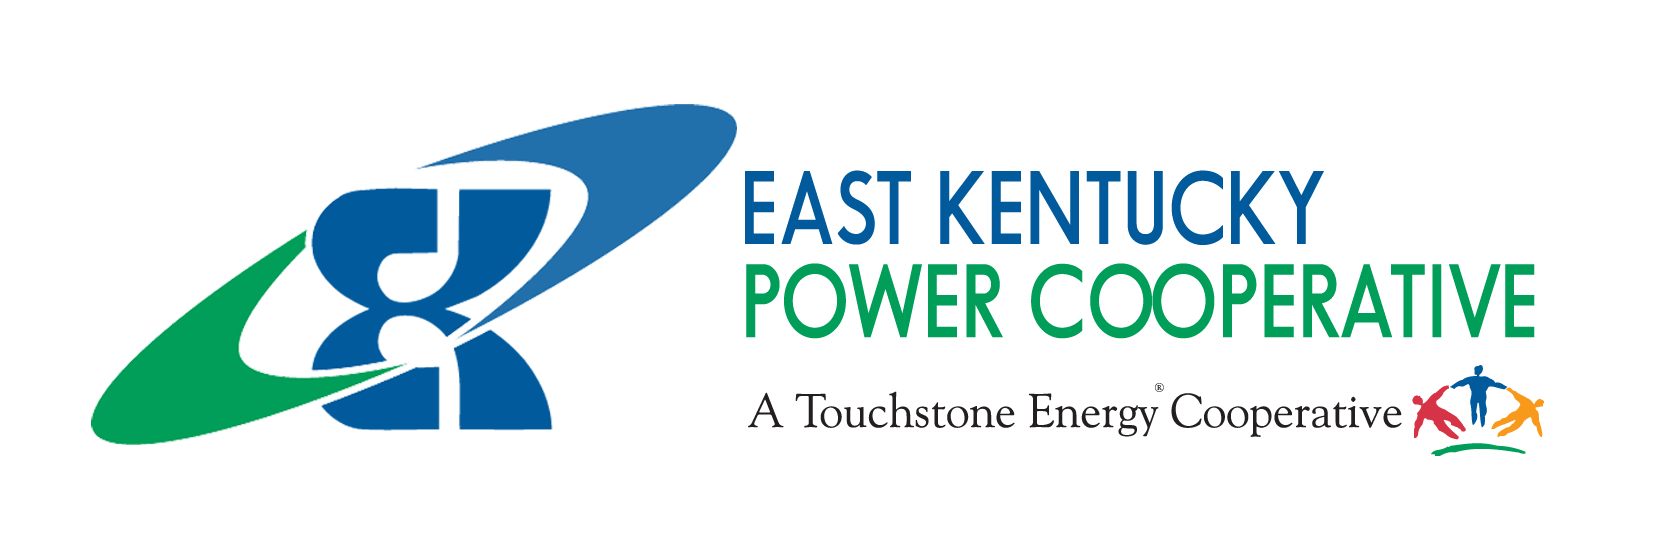 Cooperative Logo - Home. East Kentucky Power Cooperative